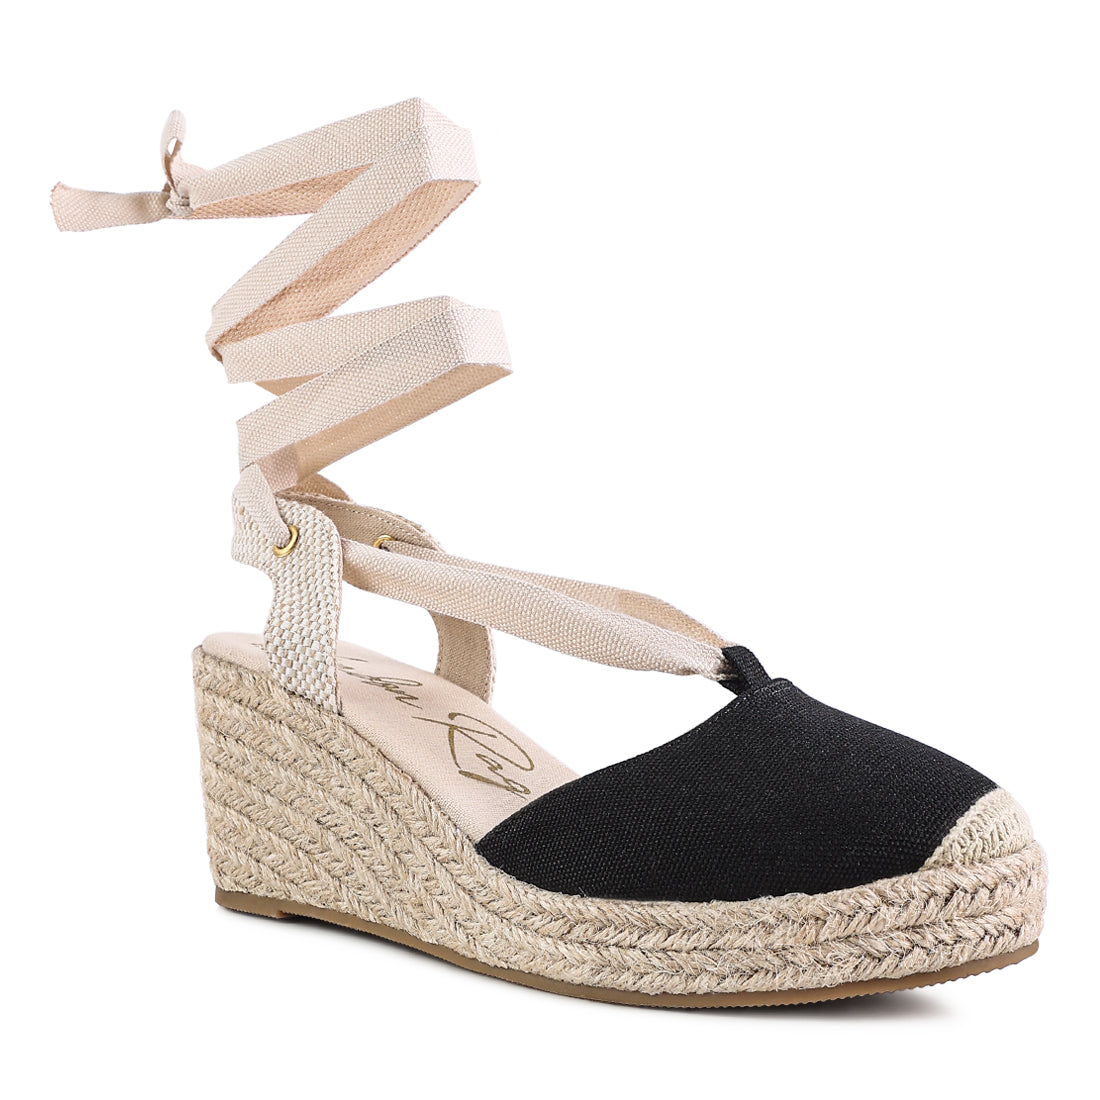 strappy wedge heel sandals#color_black